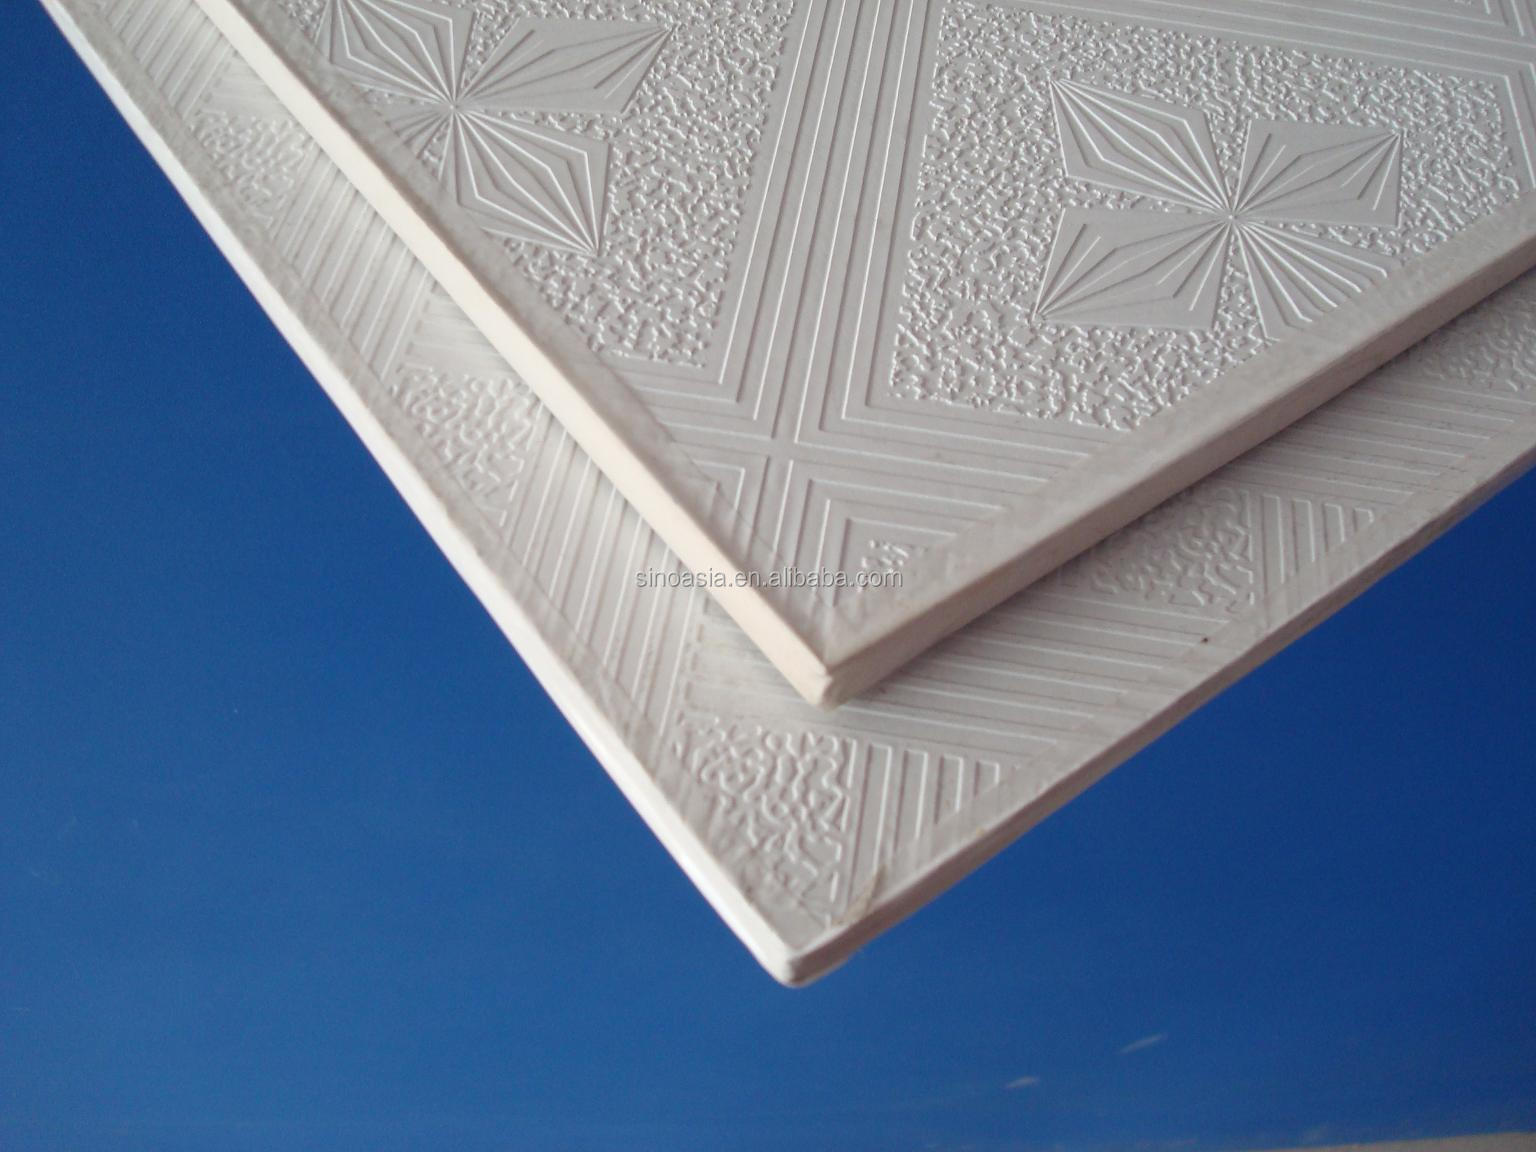 Waterproof 60x60 Pvc Gypsum Ceiling Tiles With Aluminum Foil Buy